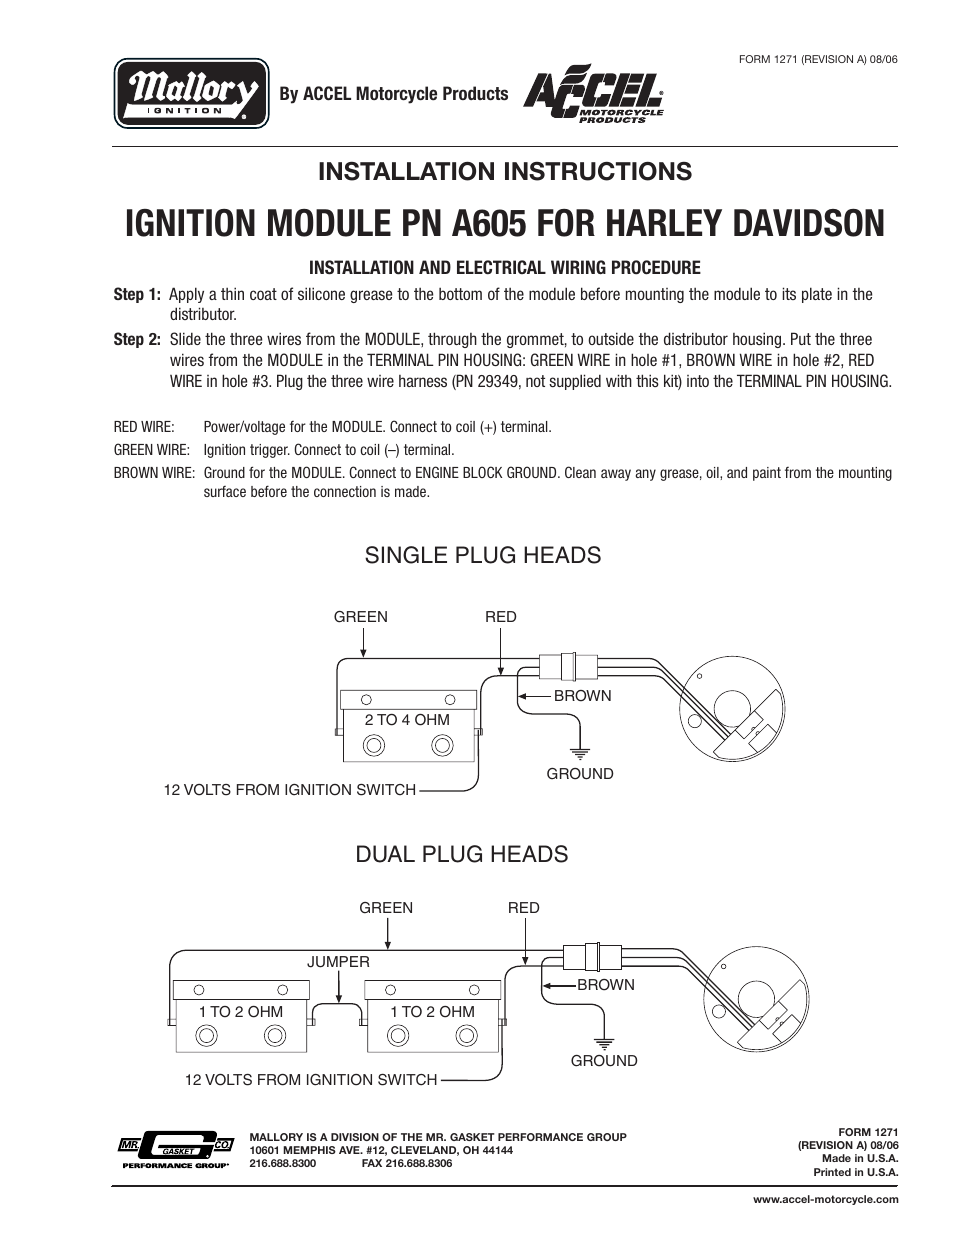 mallory hei distributor wiring diagram